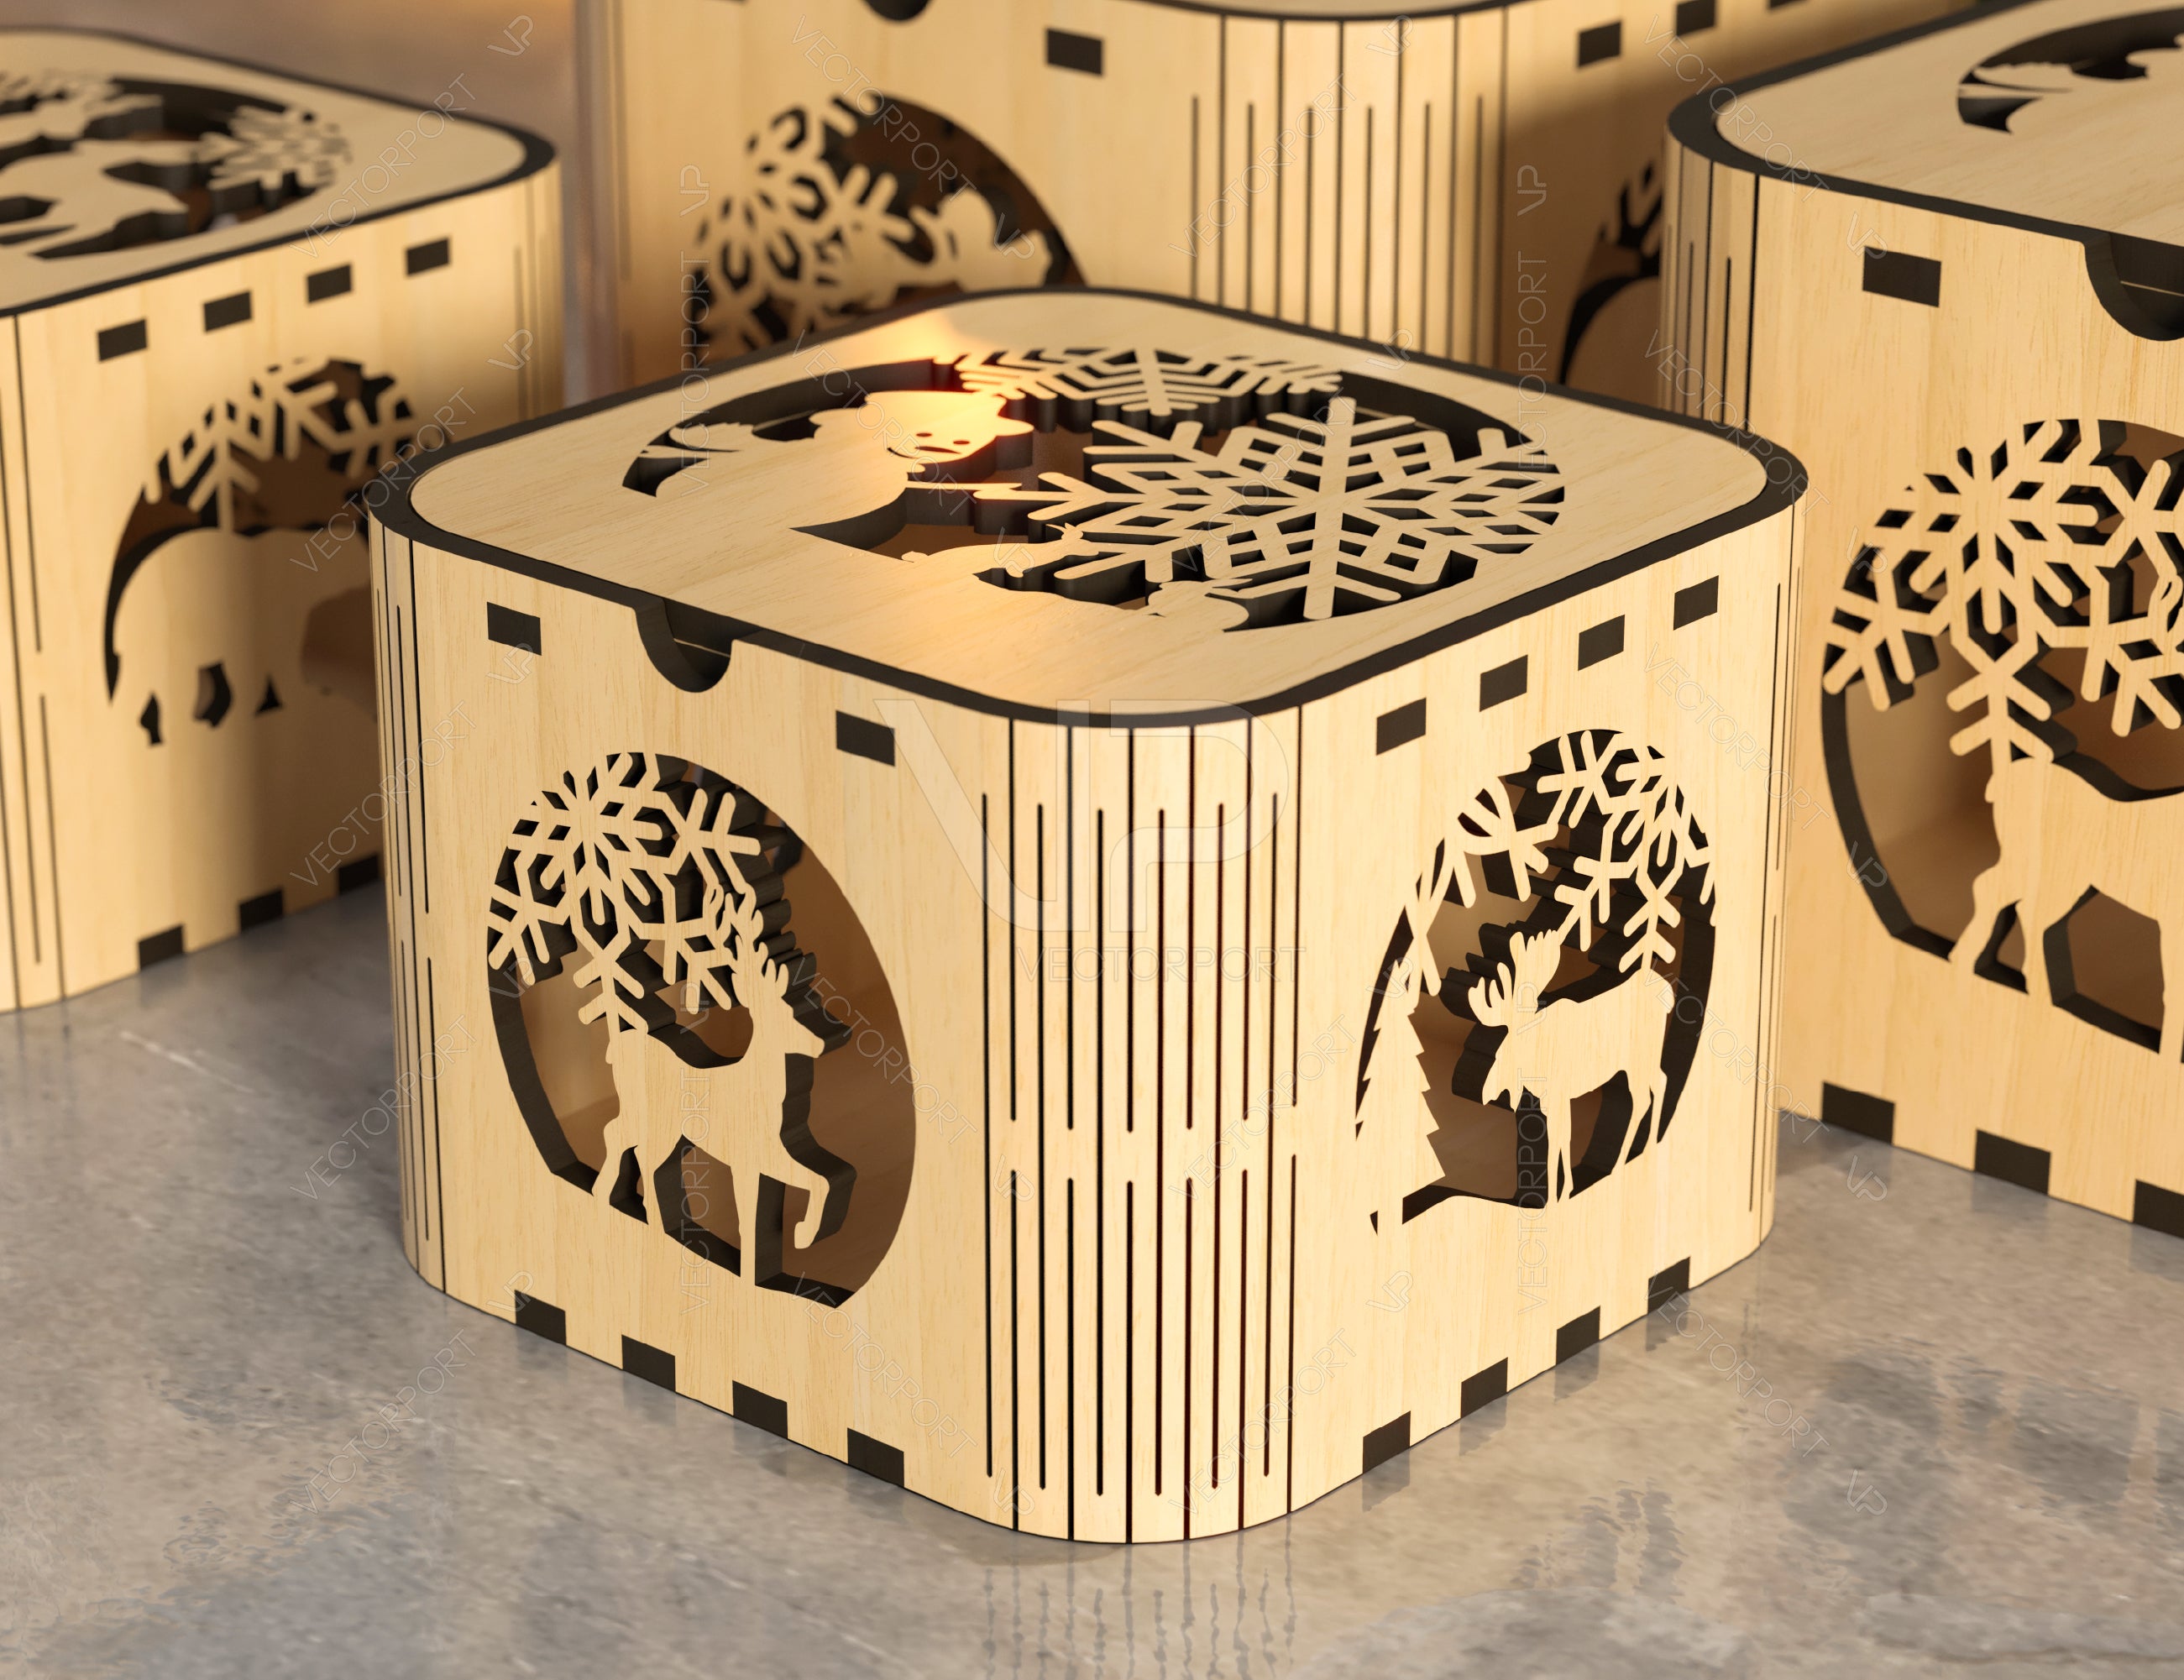 Christmas Template Decorative Wooden New Year Gift Box laser cut Jeweler Case Digital Download |#U323|